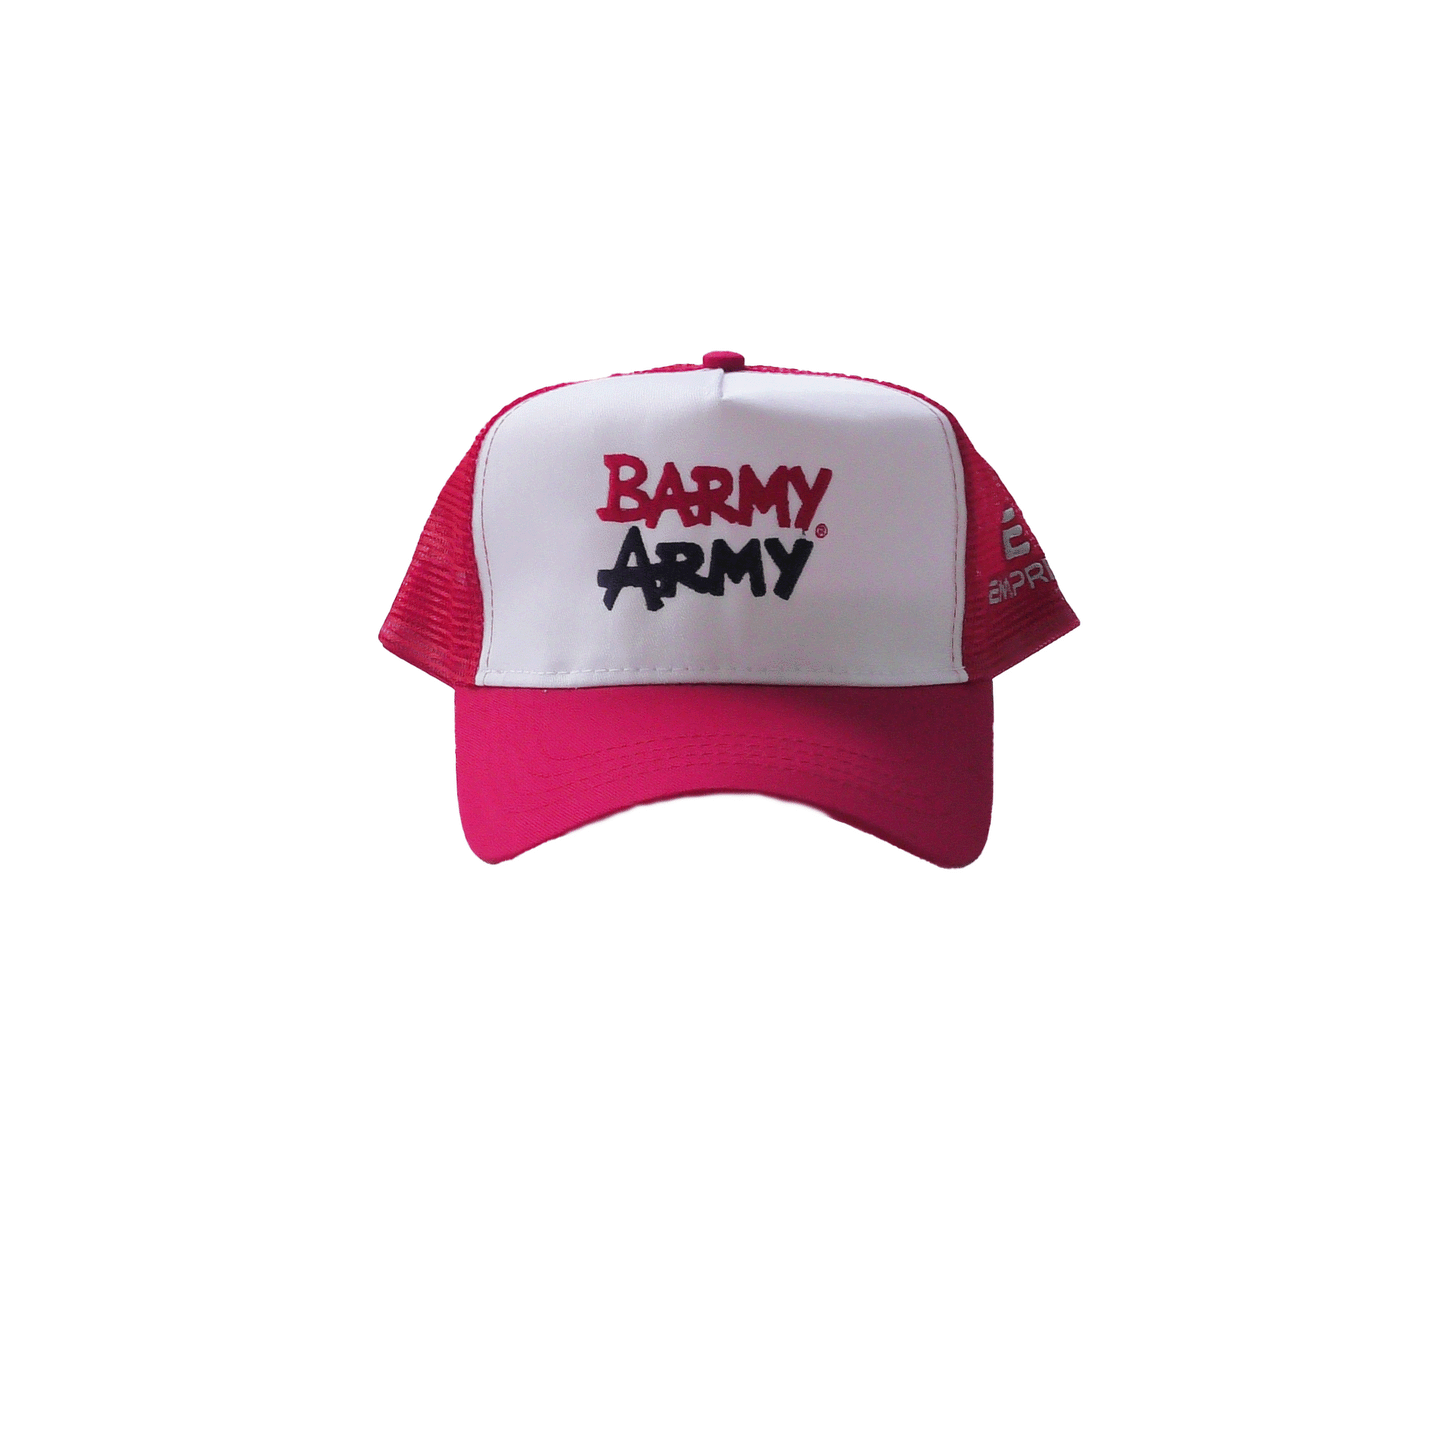 Barmy Army red trucker cap